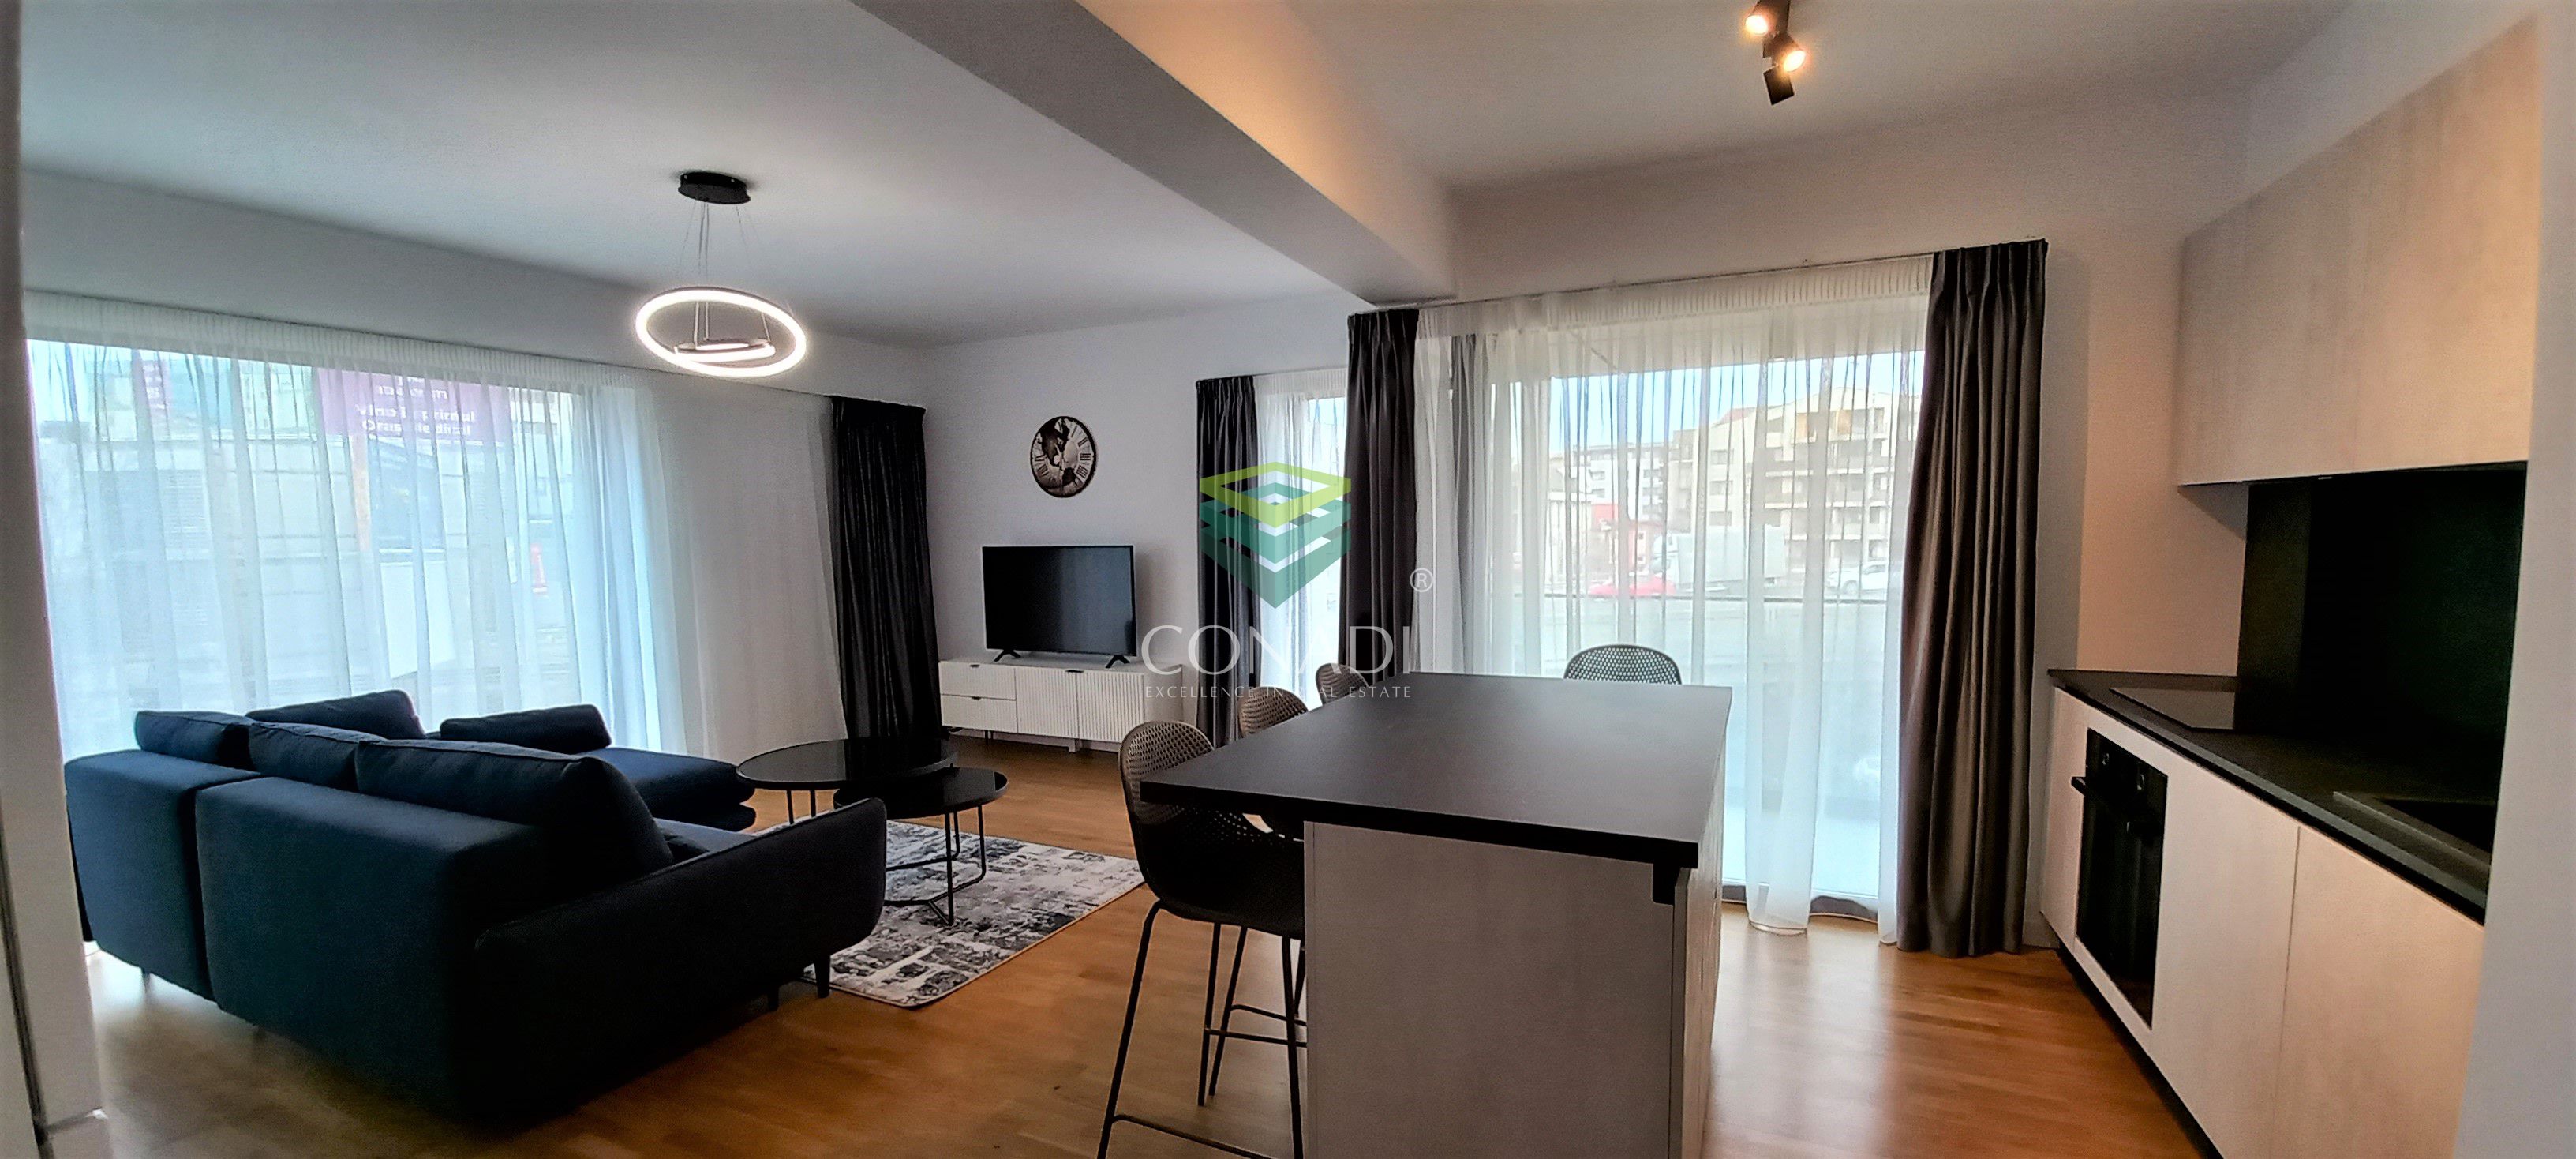 2-room apartment for rent - Herastrau